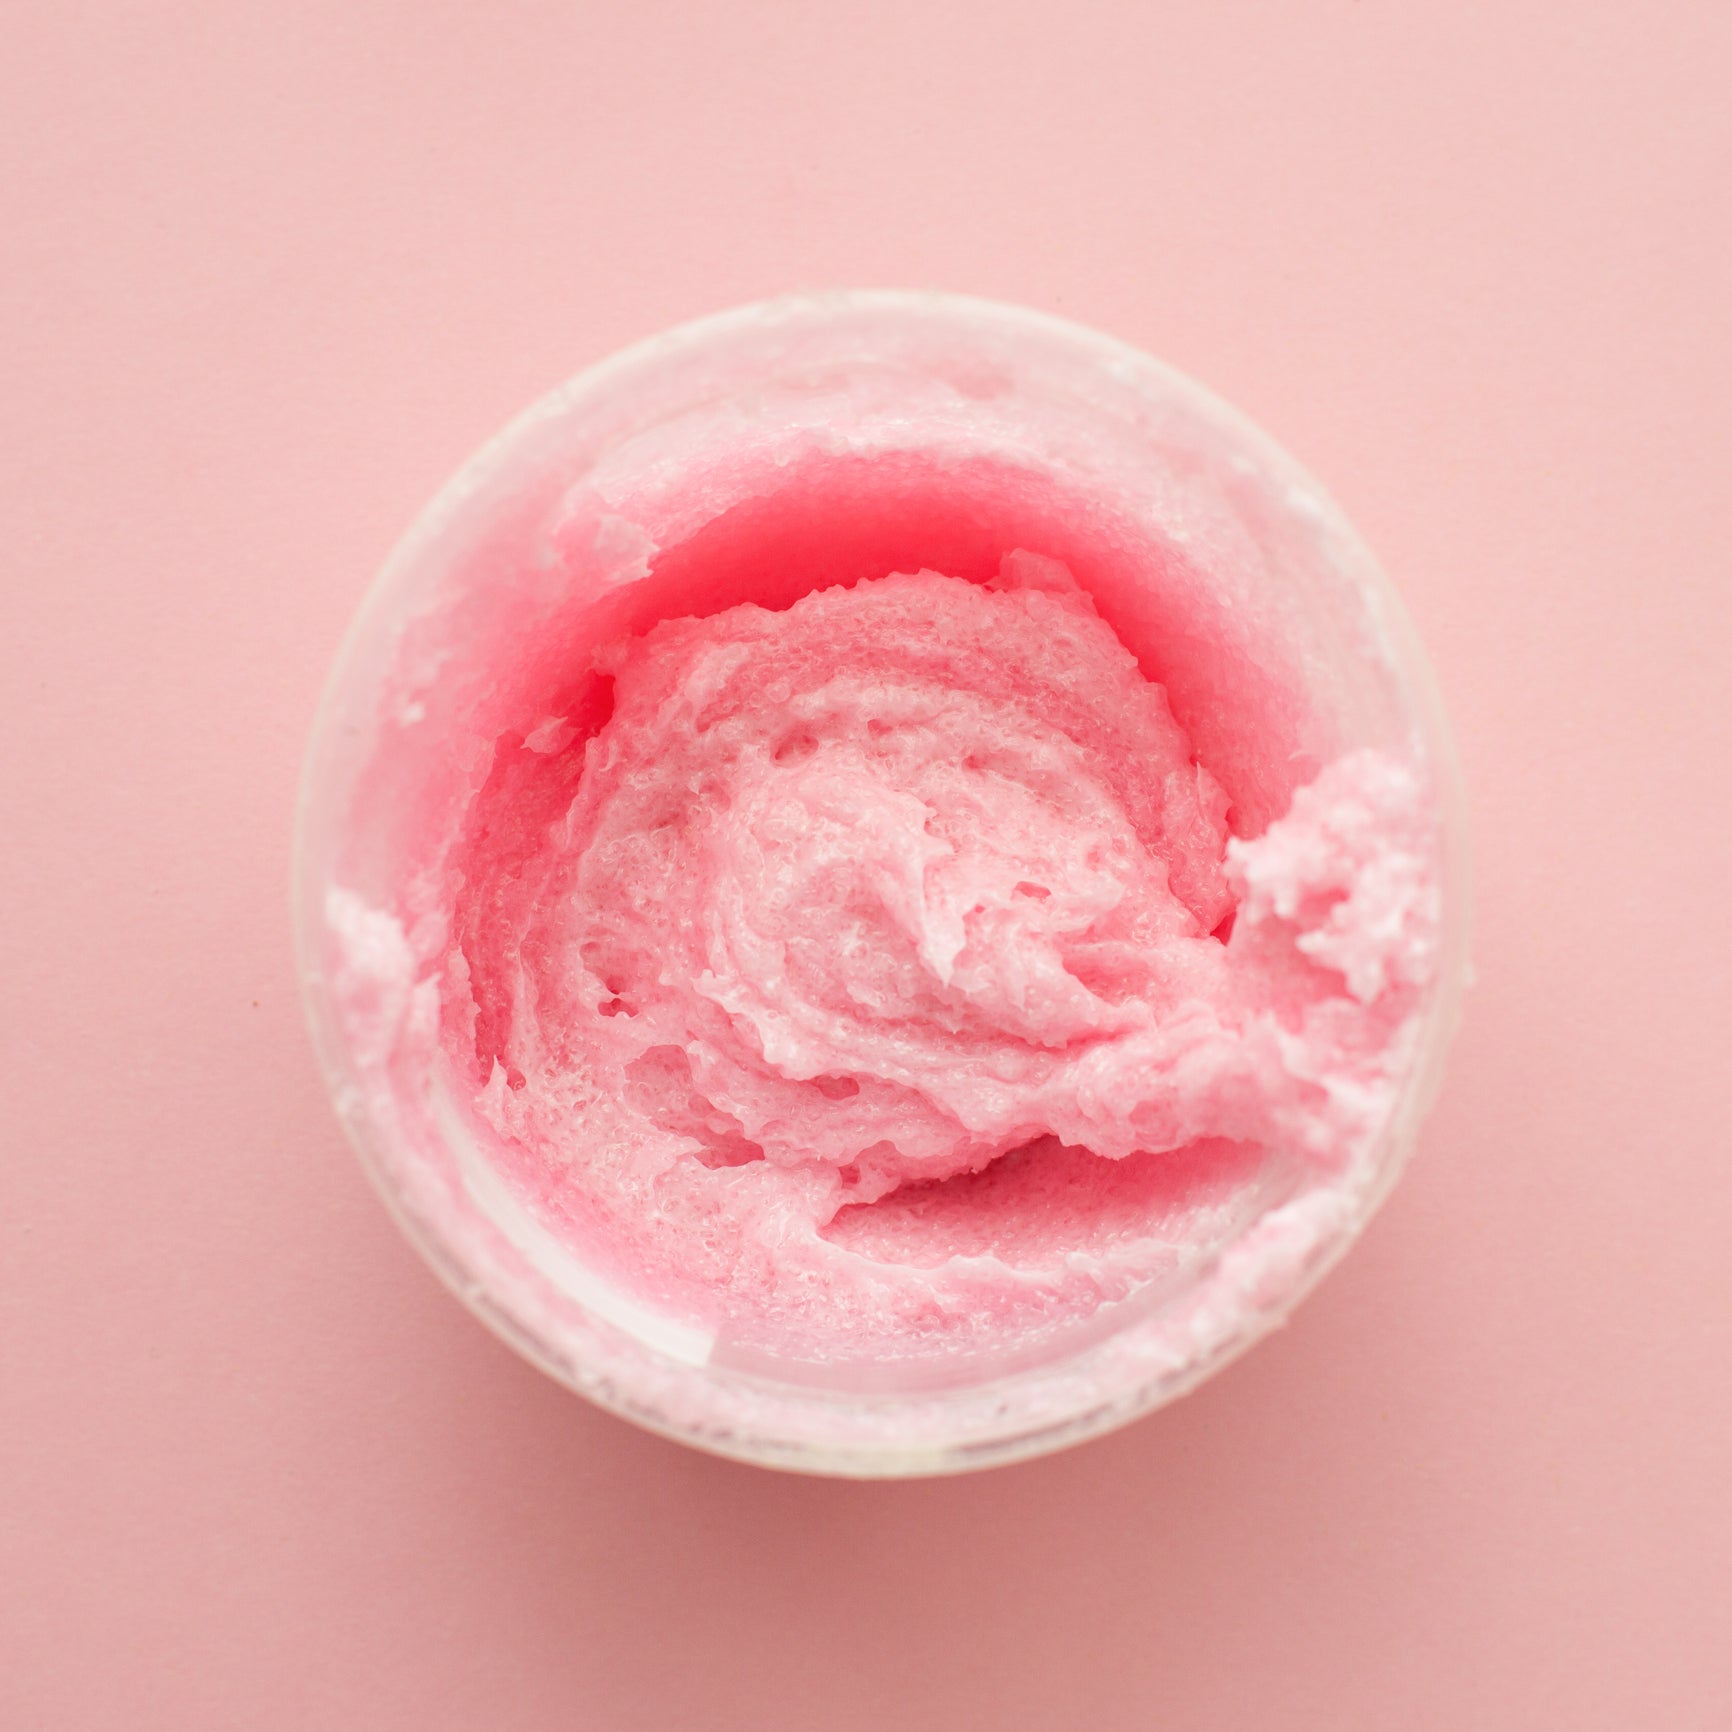 Foaming Sugar Scrub “Just Peachy”